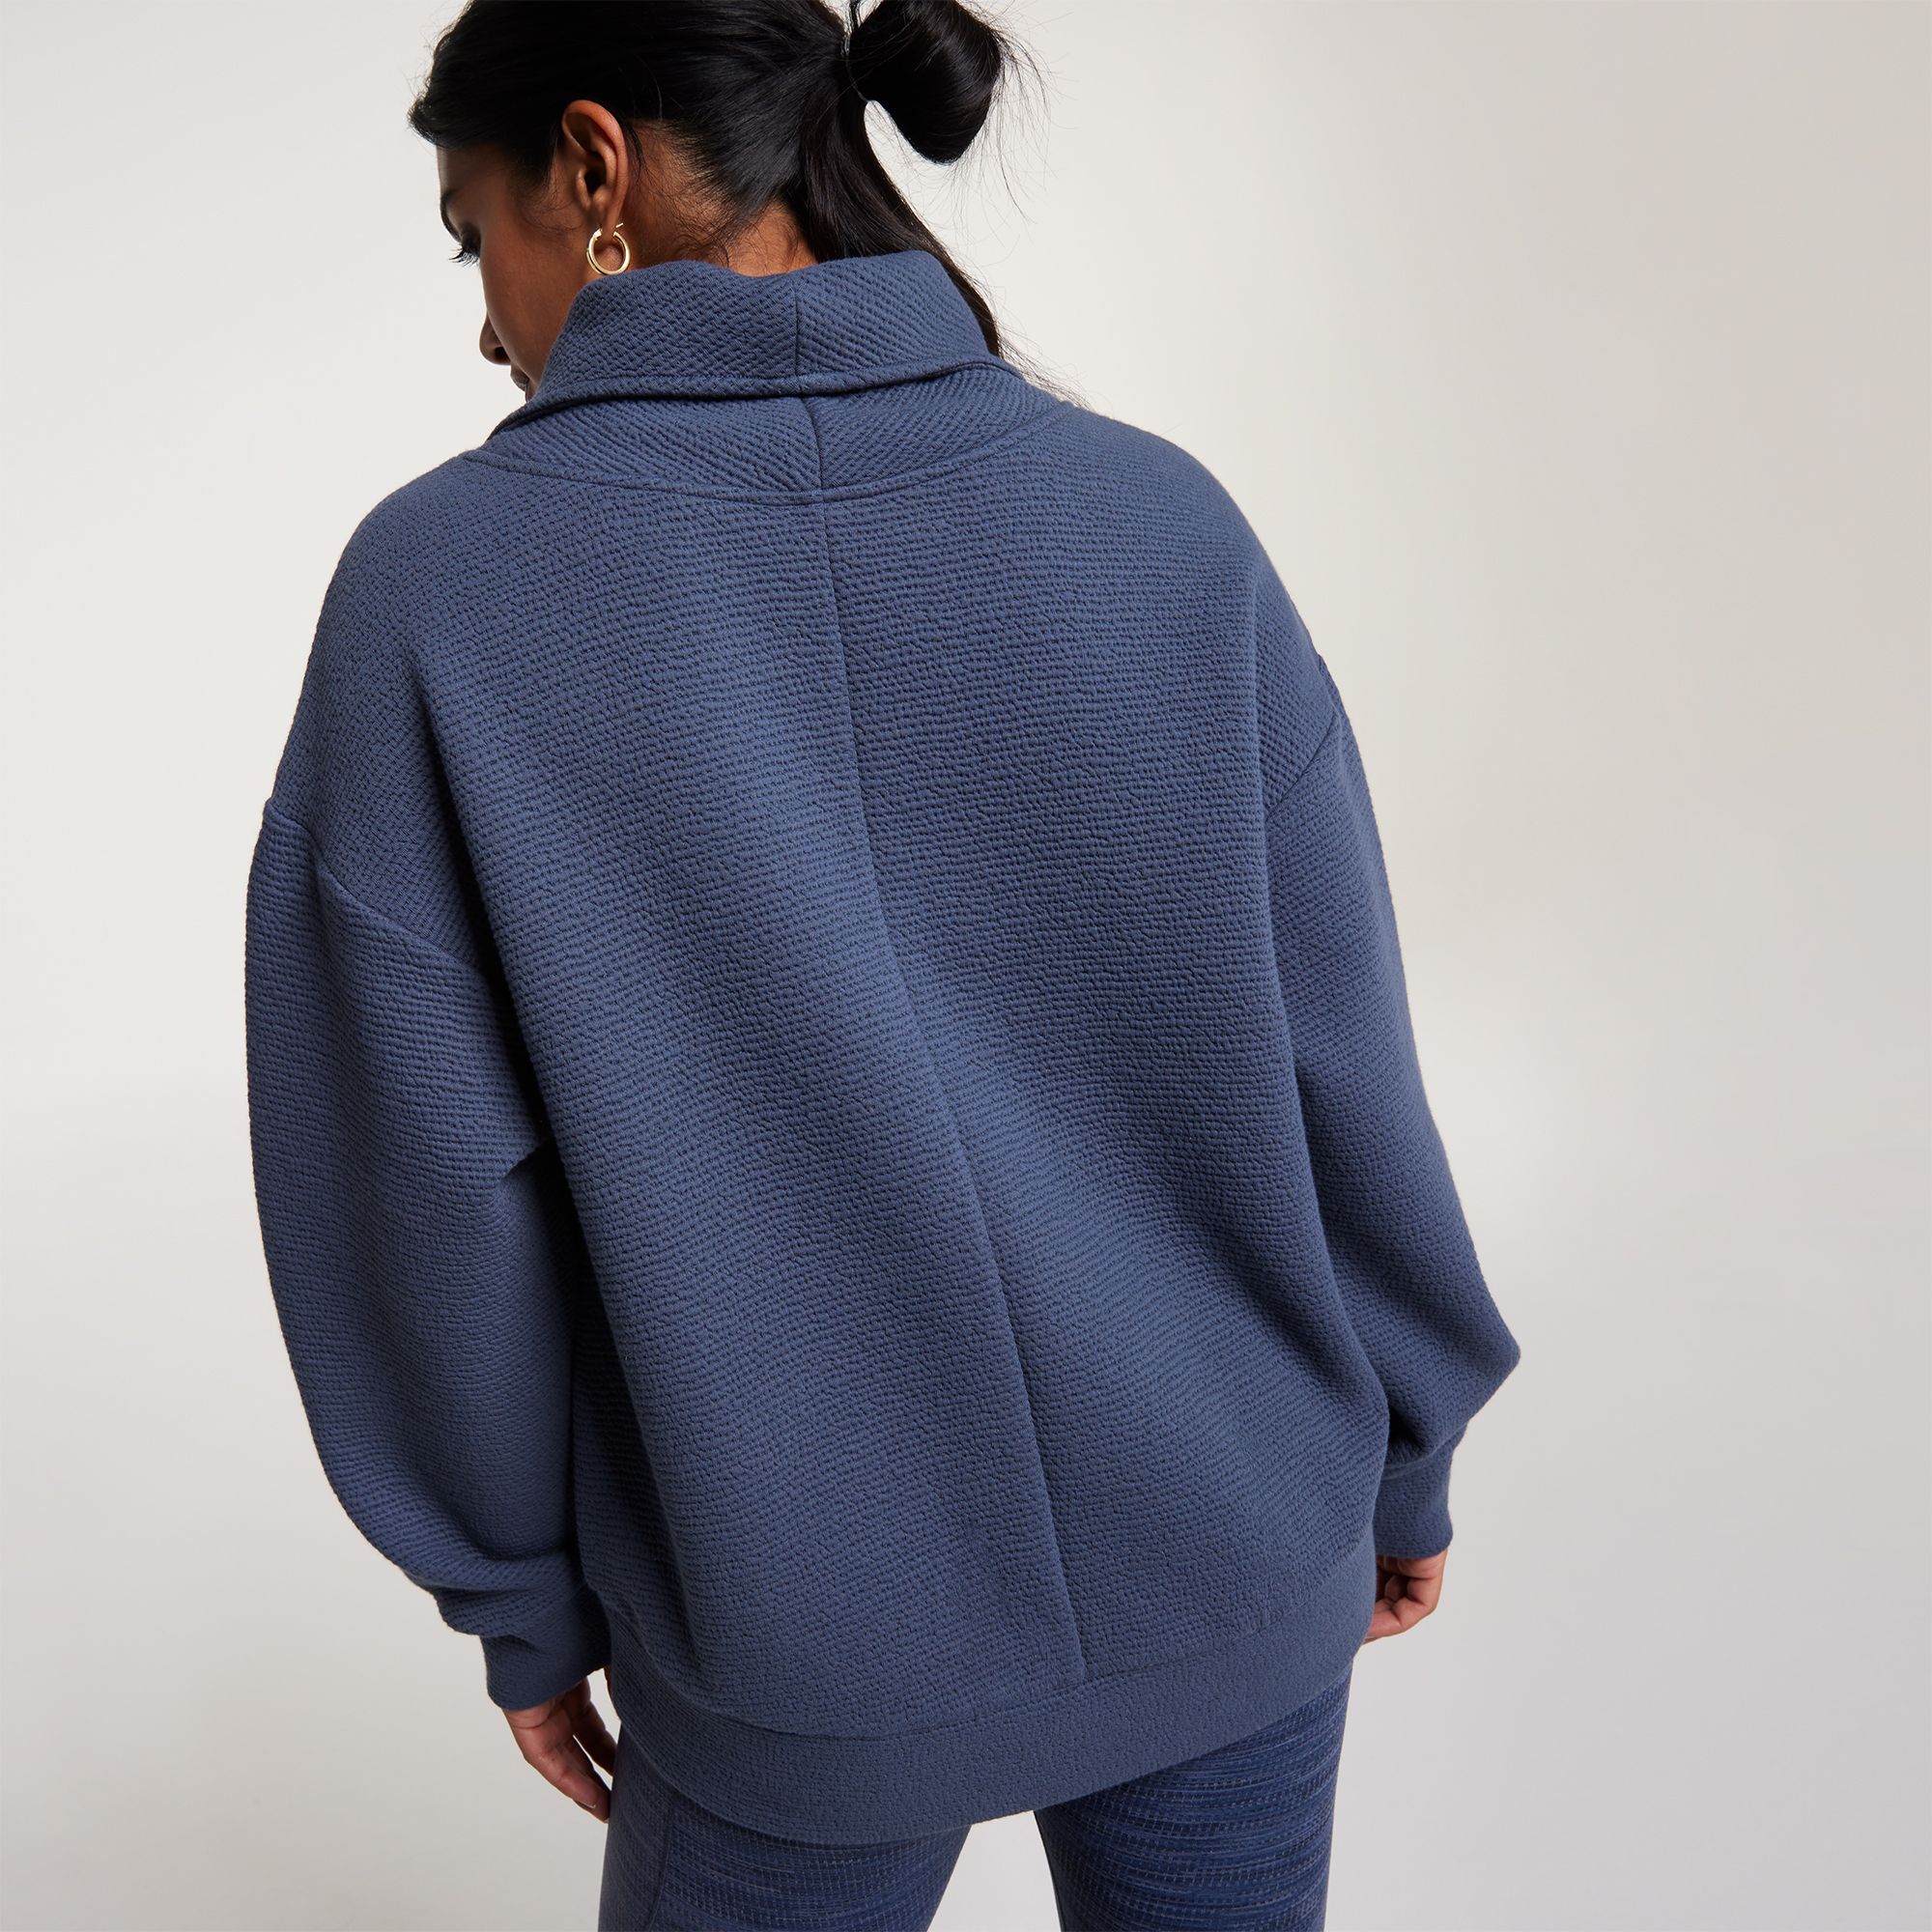 Calia 1/4 Zip Pullover Size S Navy Blue Long Sleeve Running